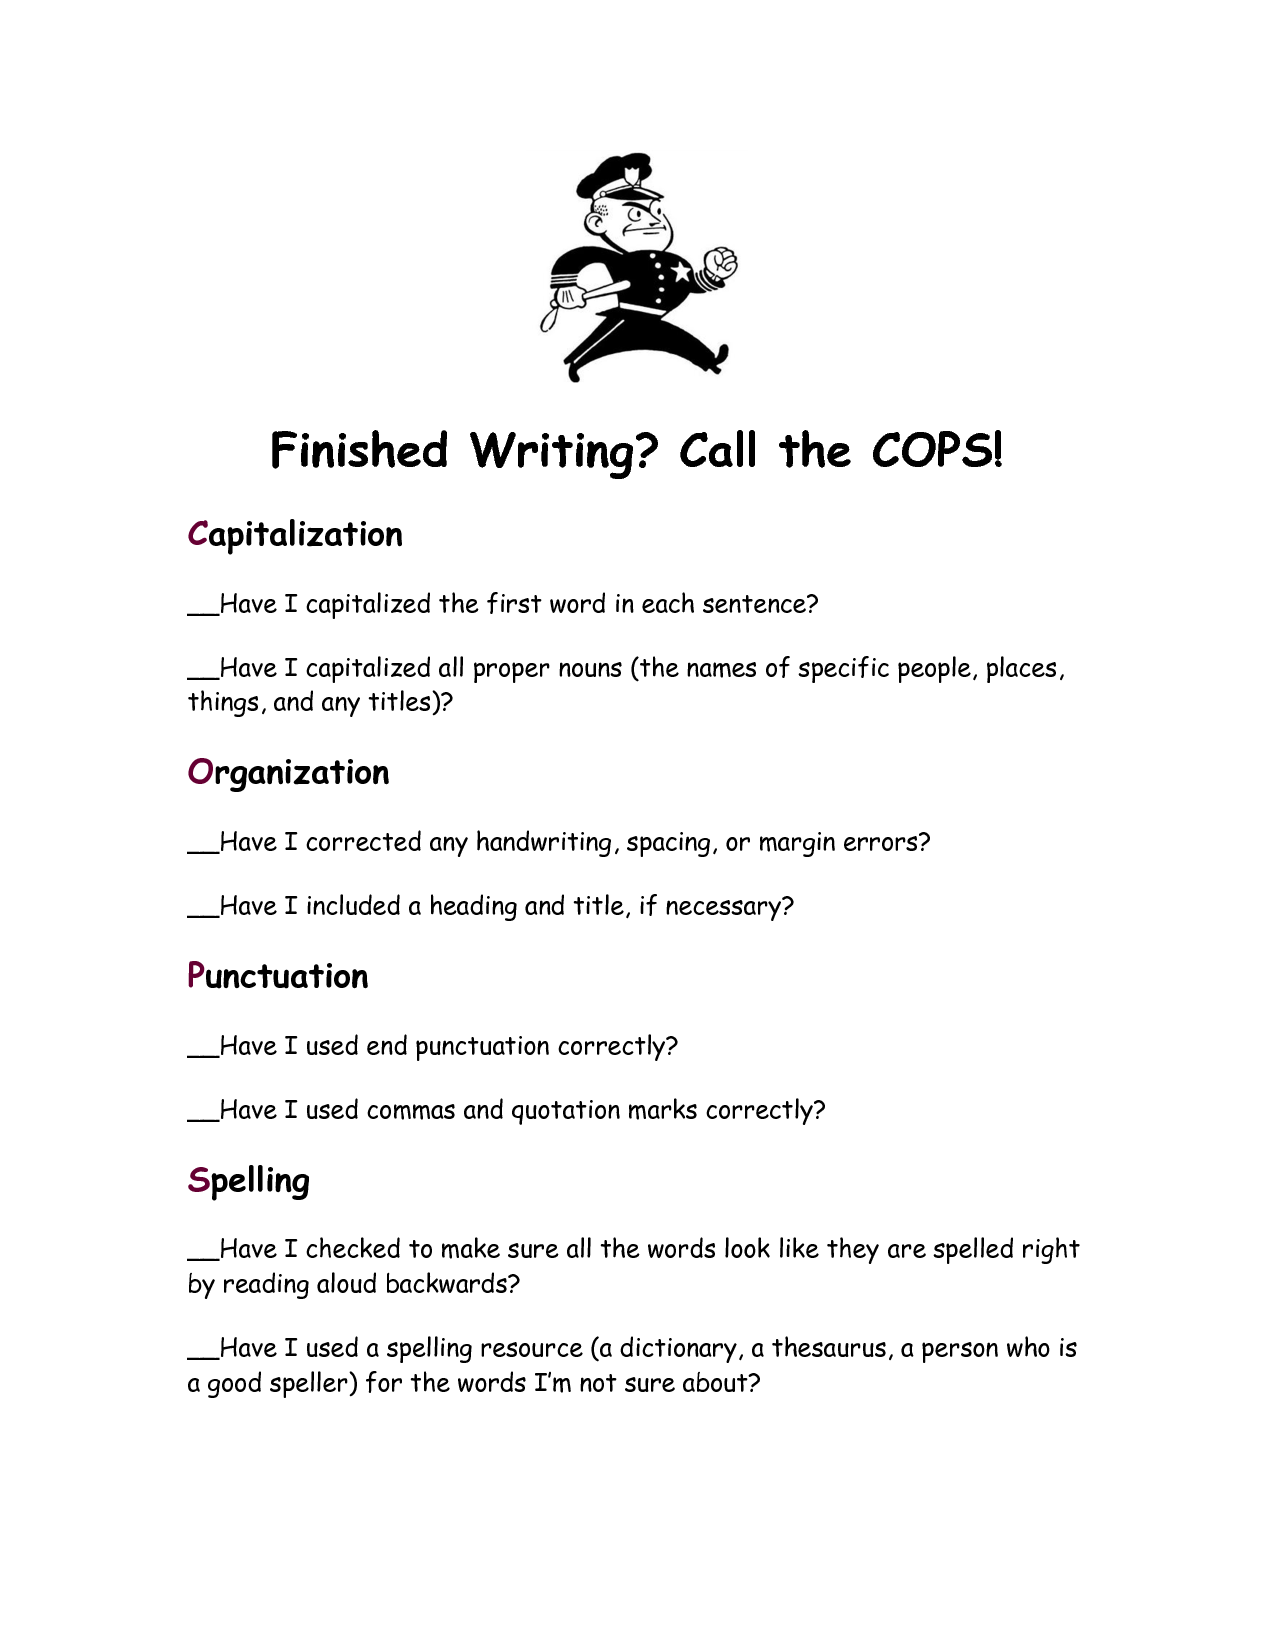 Cops Writing Editing Checklist Image